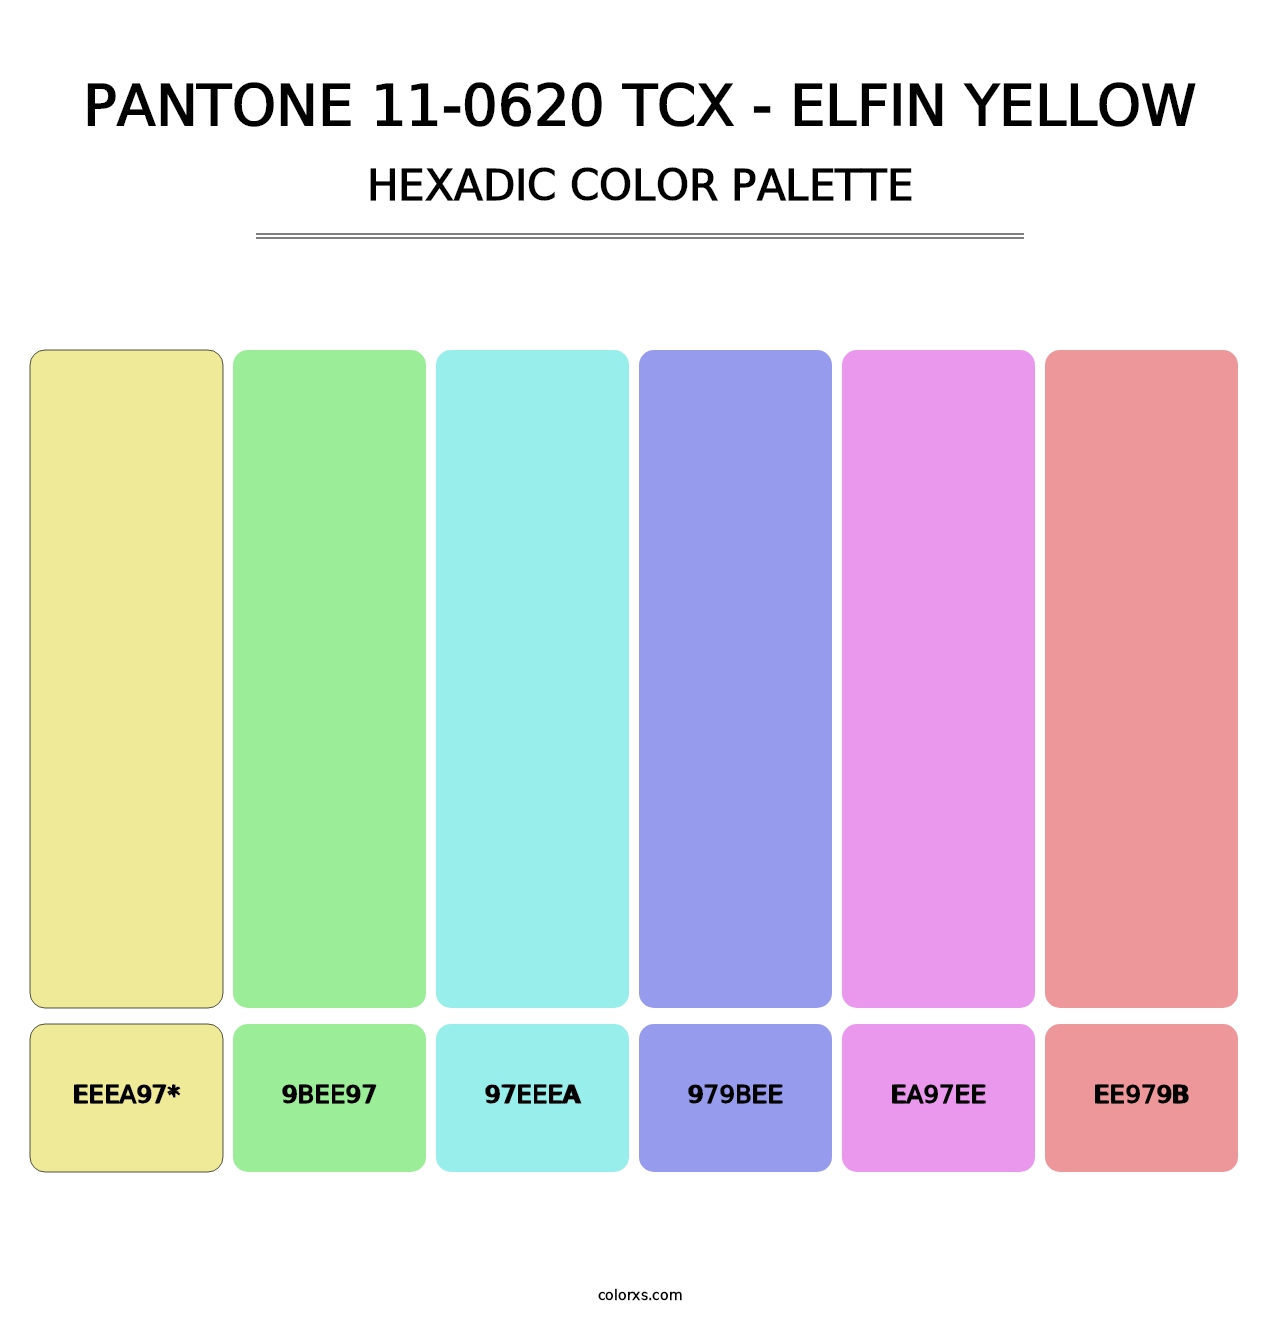 PANTONE 11-0620 TCX - Elfin Yellow - Hexadic Color Palette